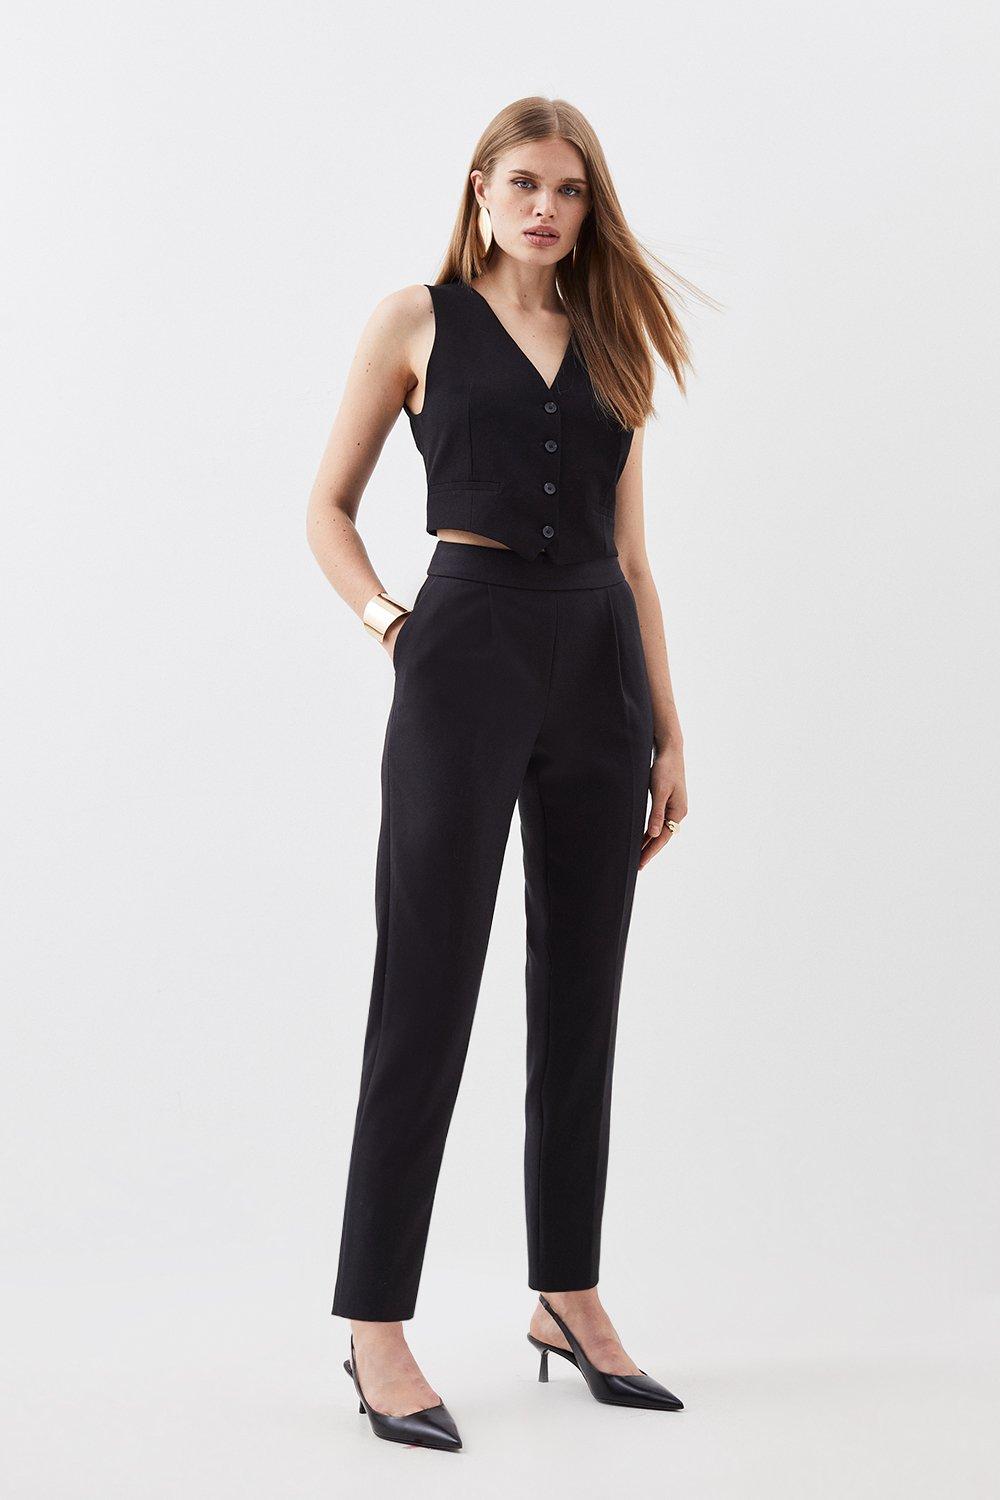 ASOS DESIGN tailored chic tapered pants in black | ASOS